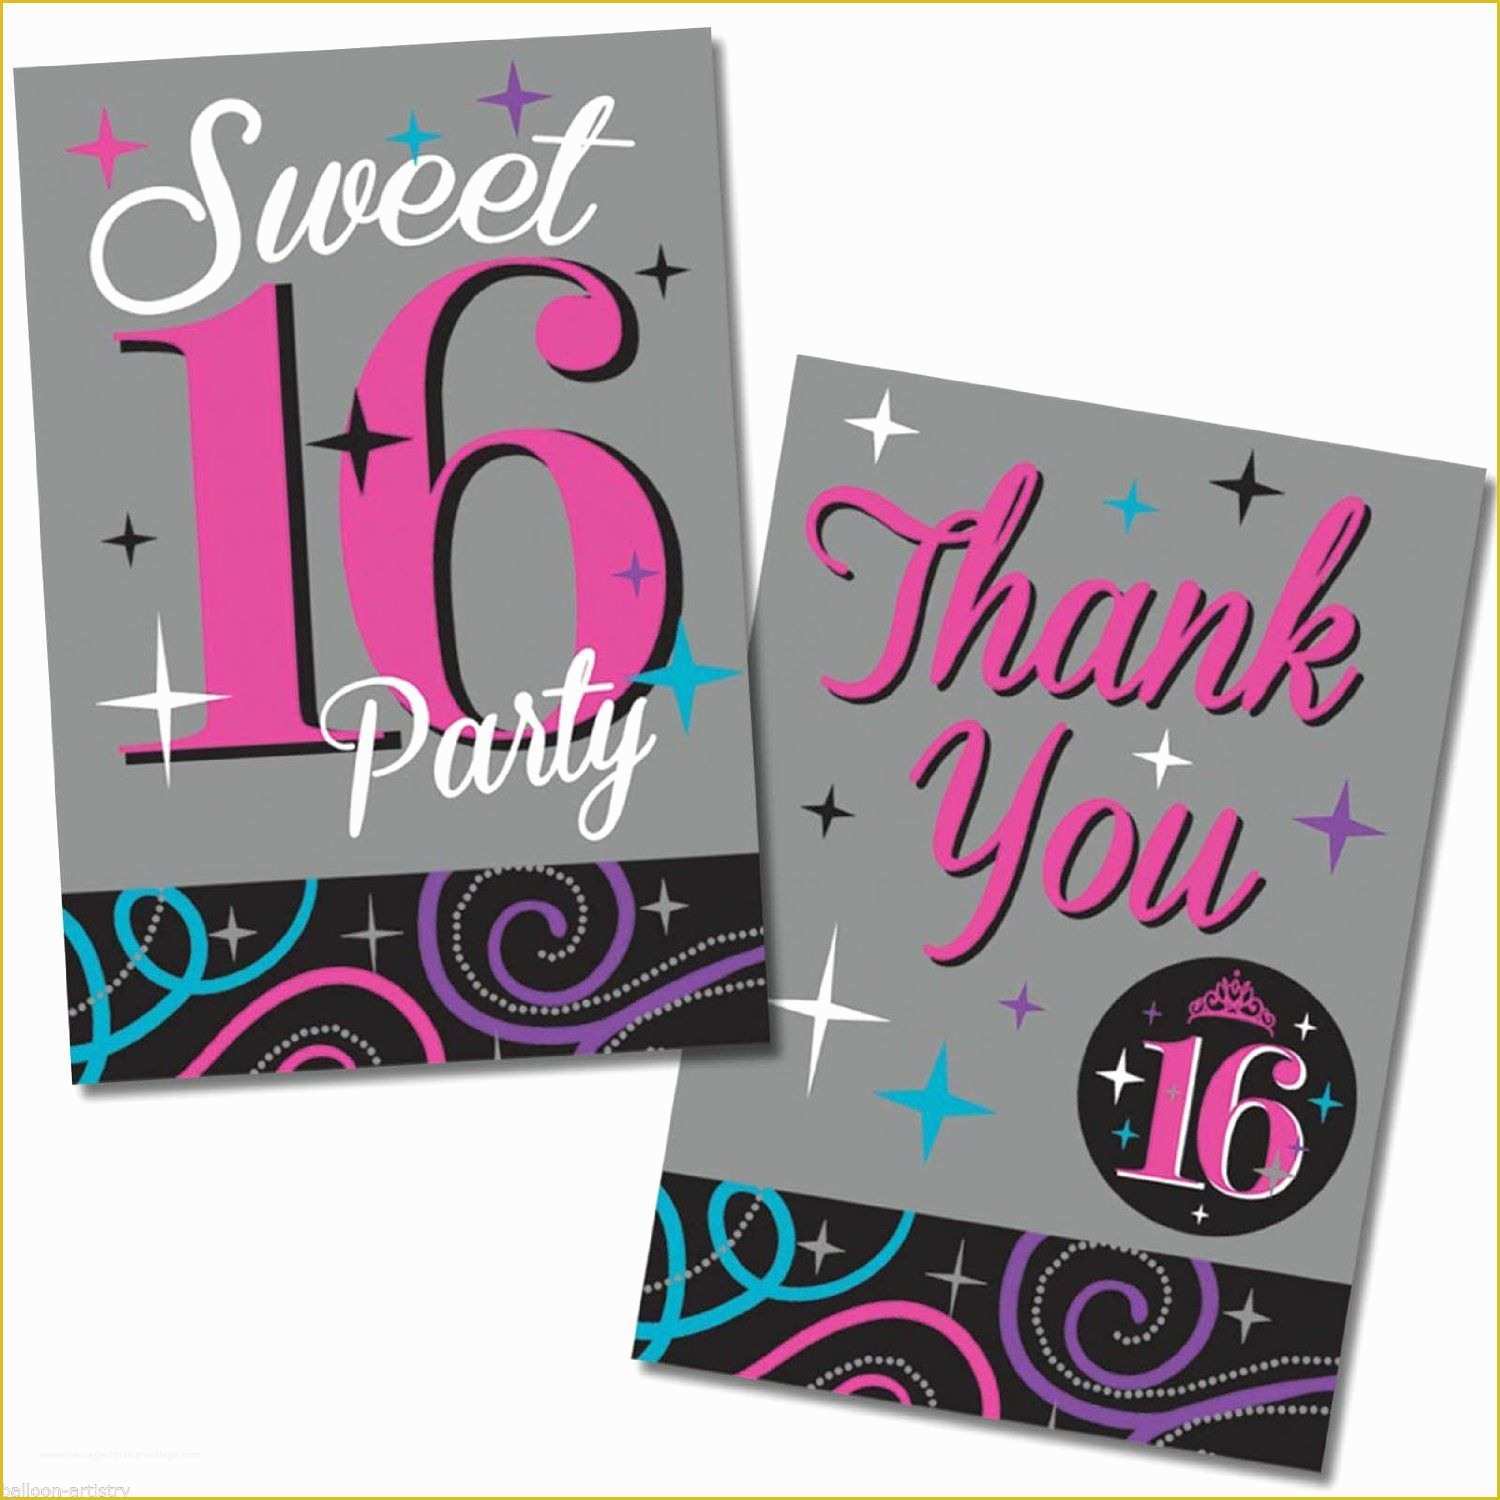 Sweet 16 Invitations Templates Free Of Birthday Party Sweet 16 Birthday Invitations Templates